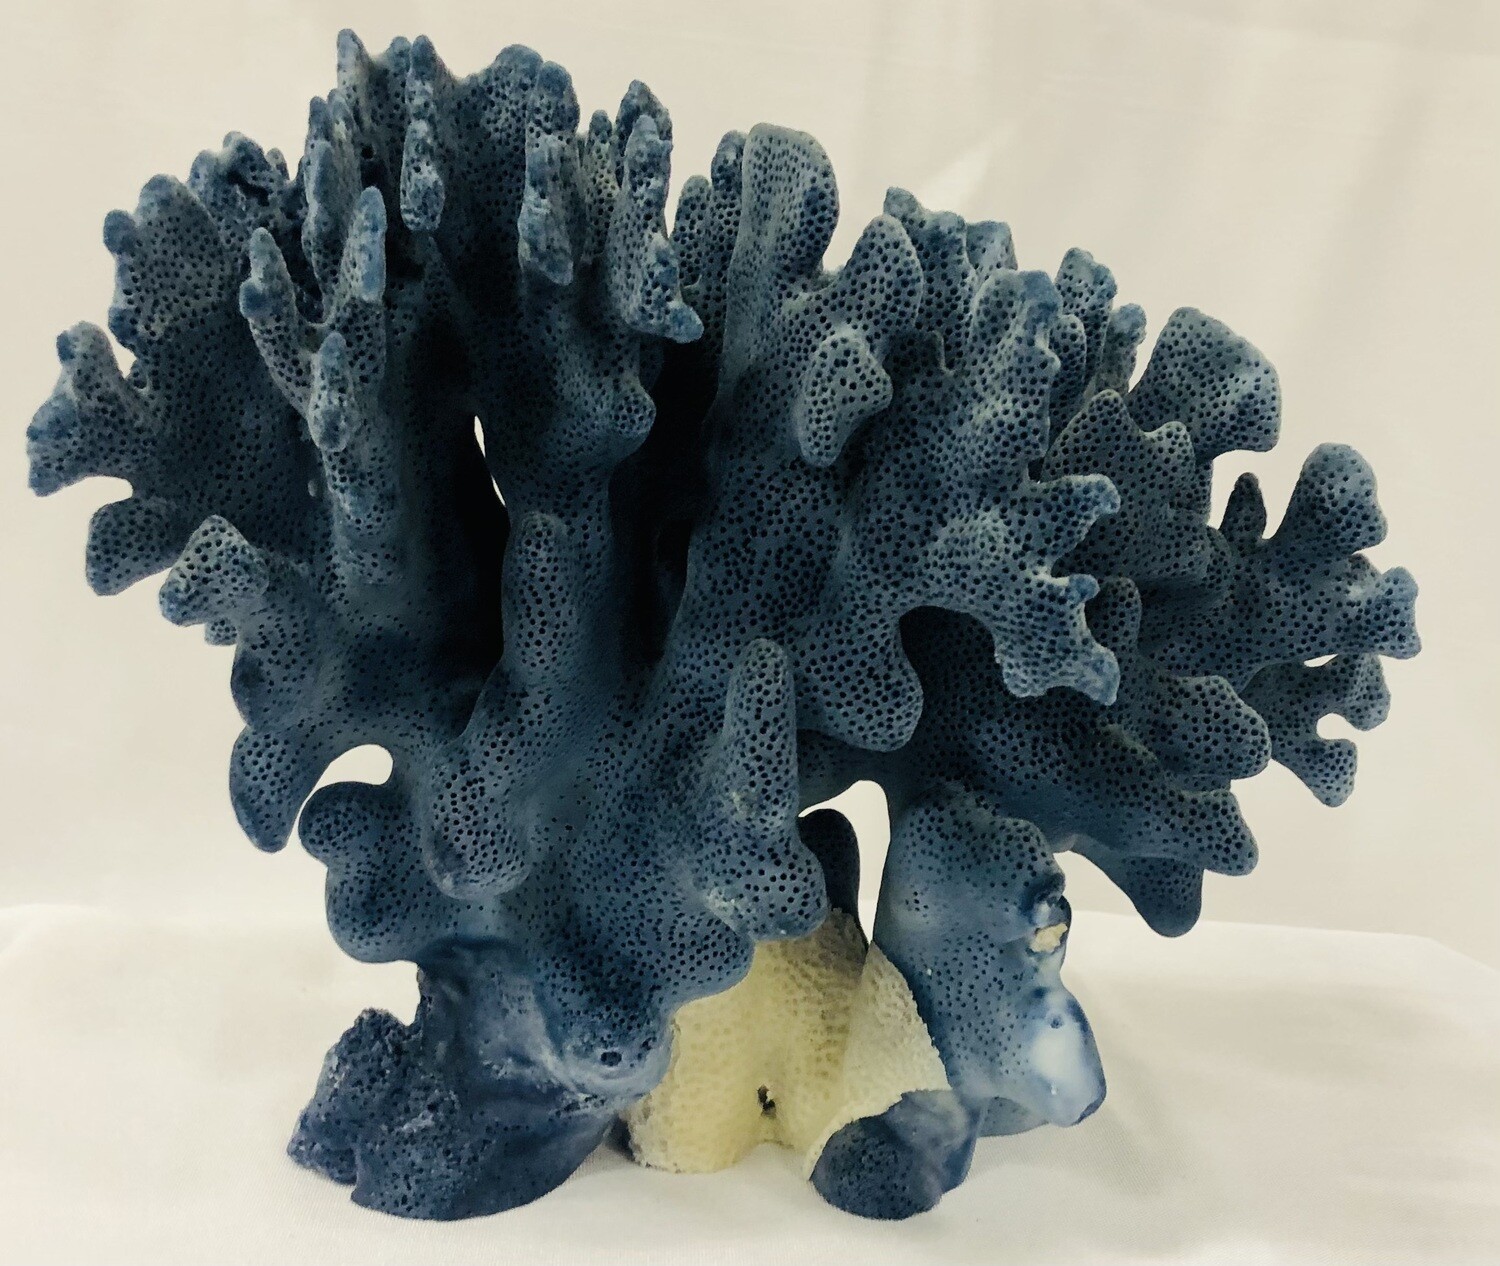 Authentic Blue Coral Specimen 10-12"